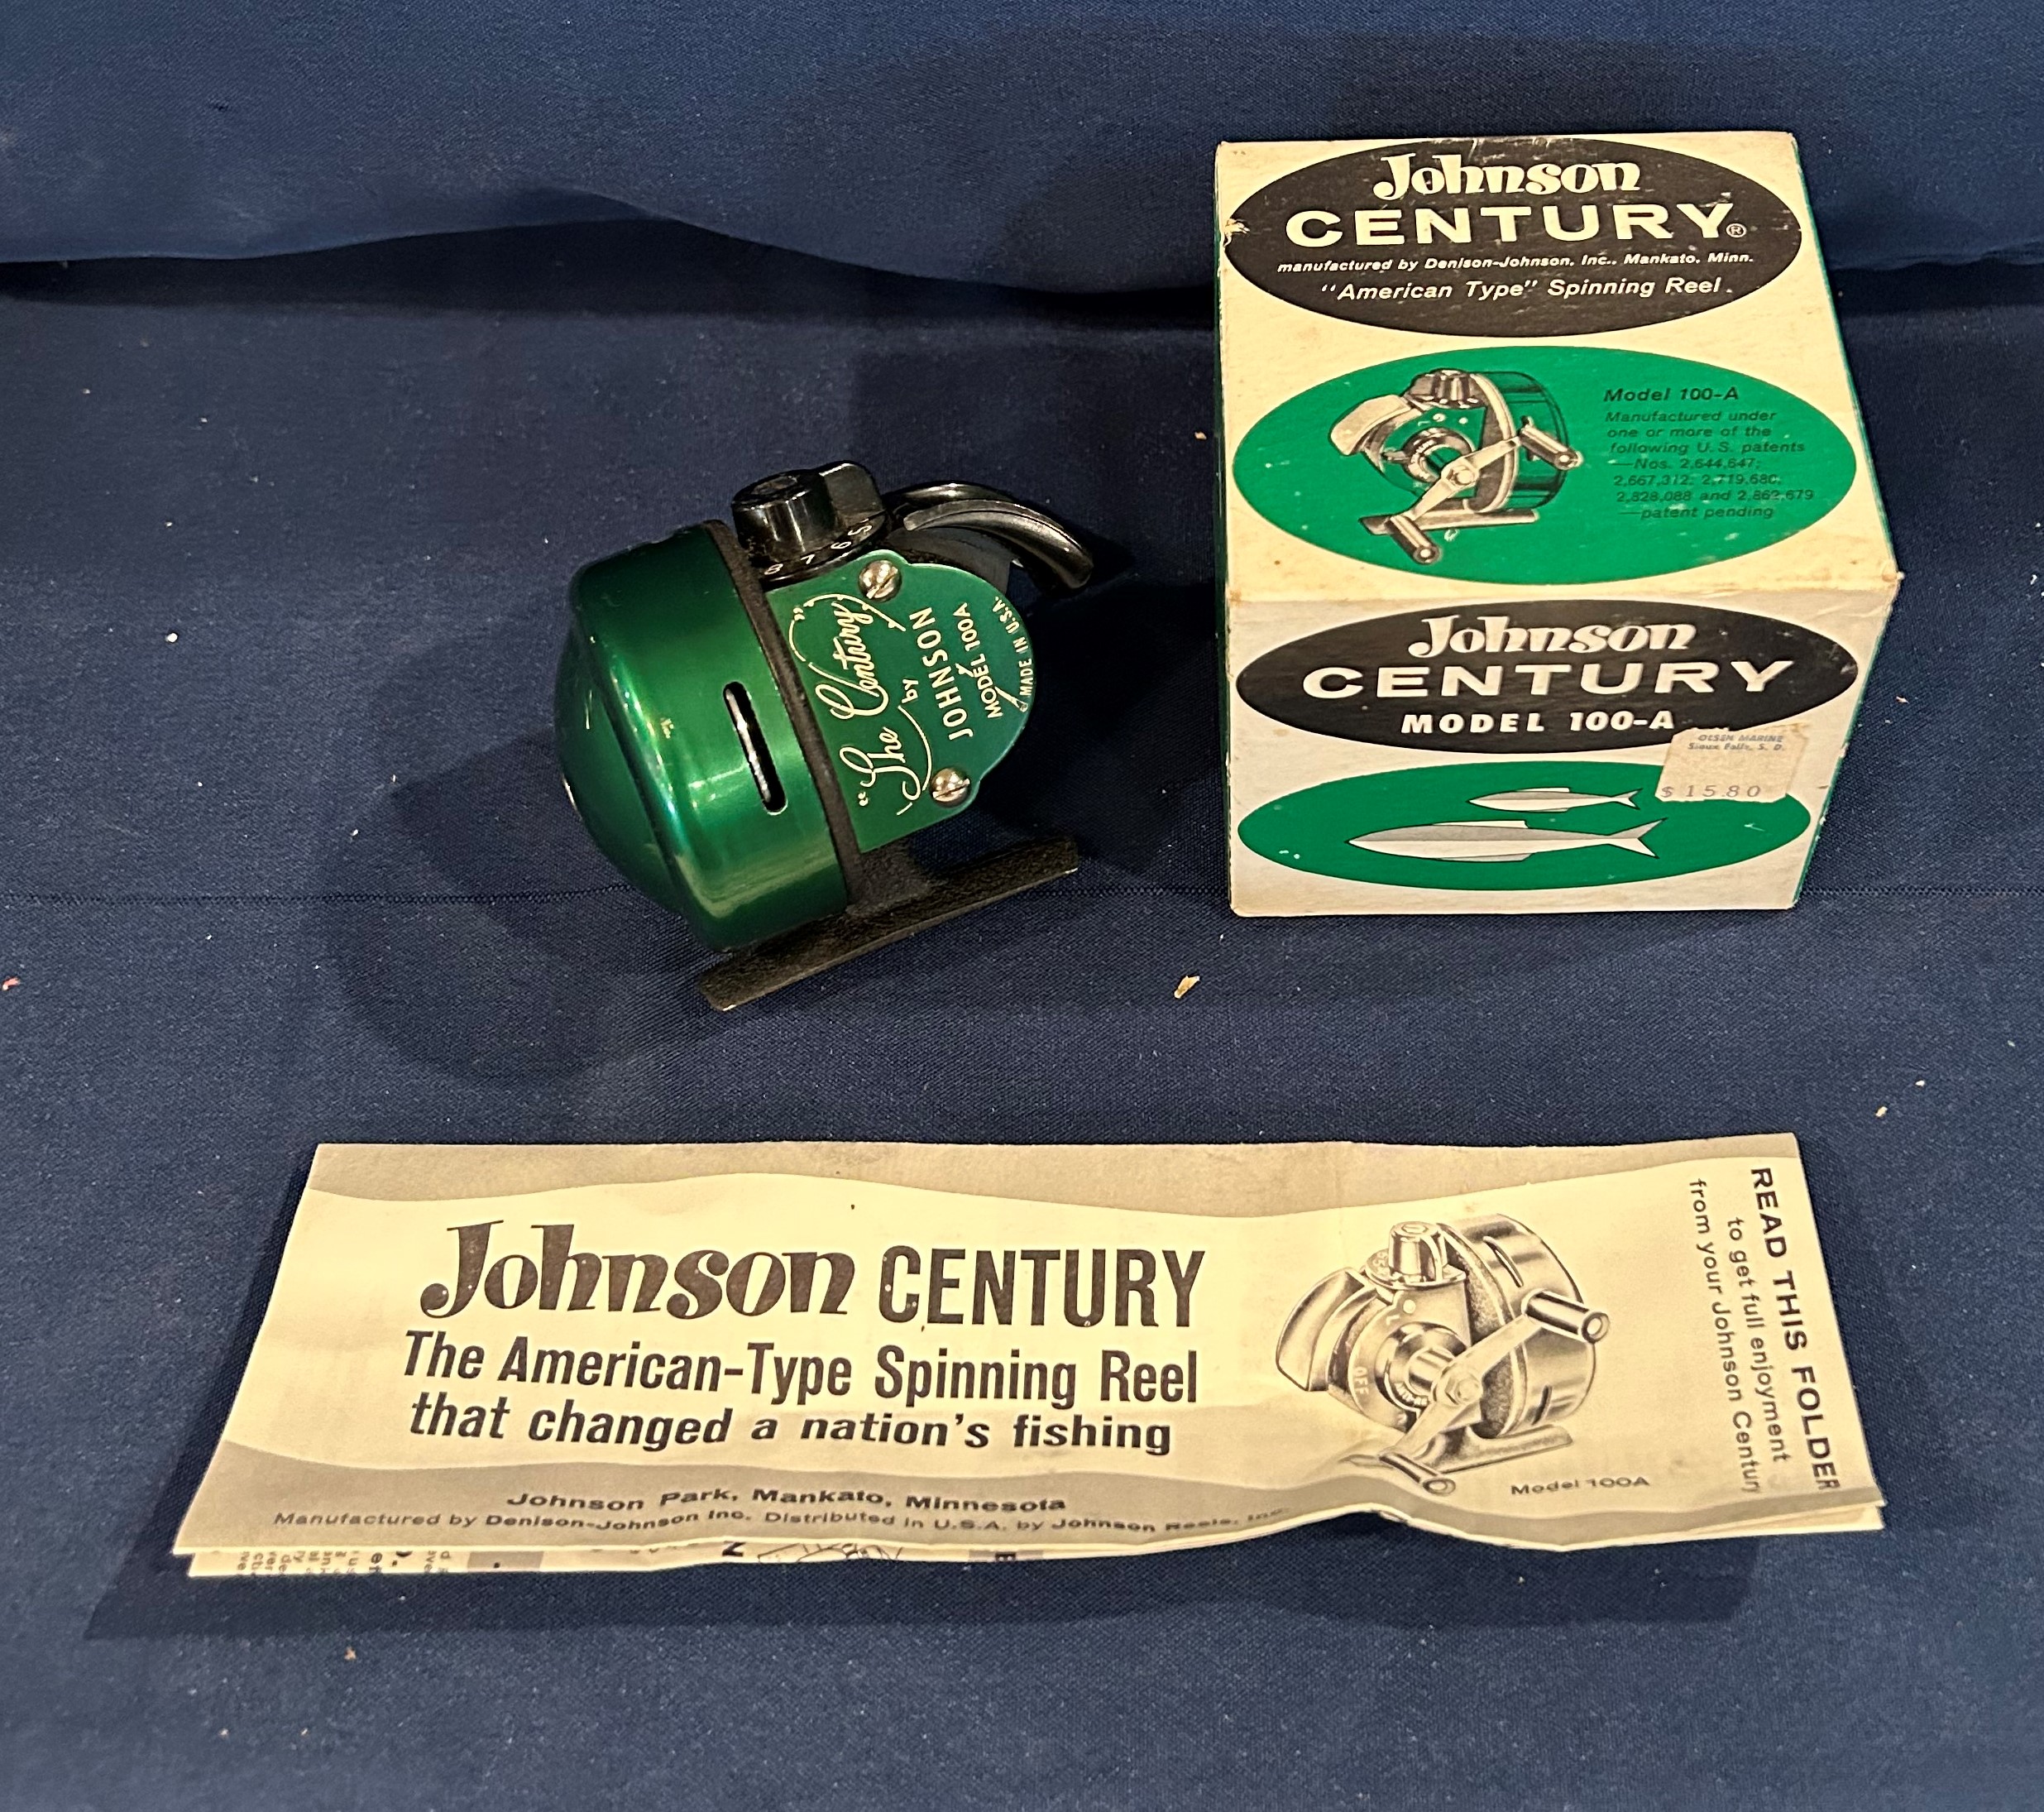 Johnson Century Model 100-A Fishing Reel - New